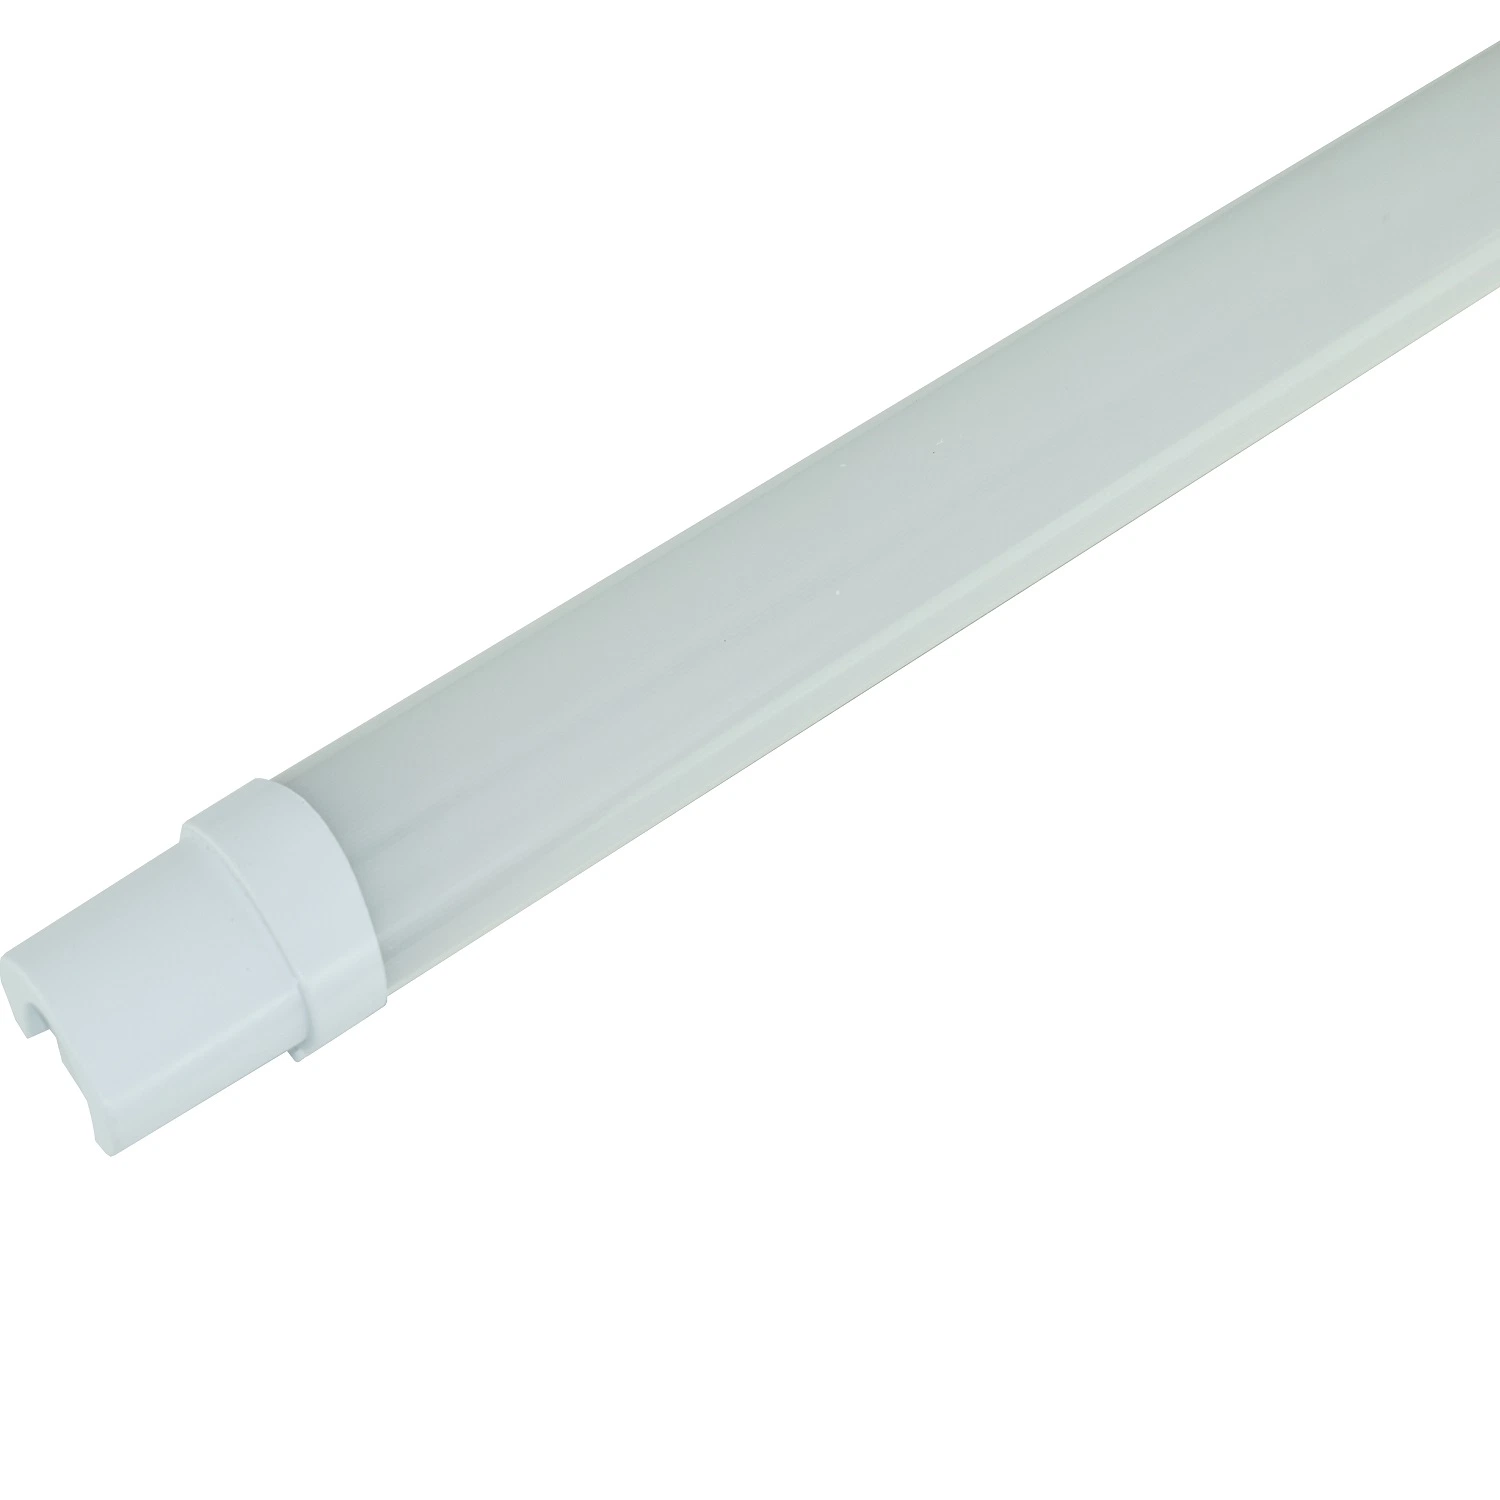 IP65 New Design Ceiling Waterproof Lamp LED Linear Light Fixture Batten Triproof Tube Light 1.2m 36W LED Fixture